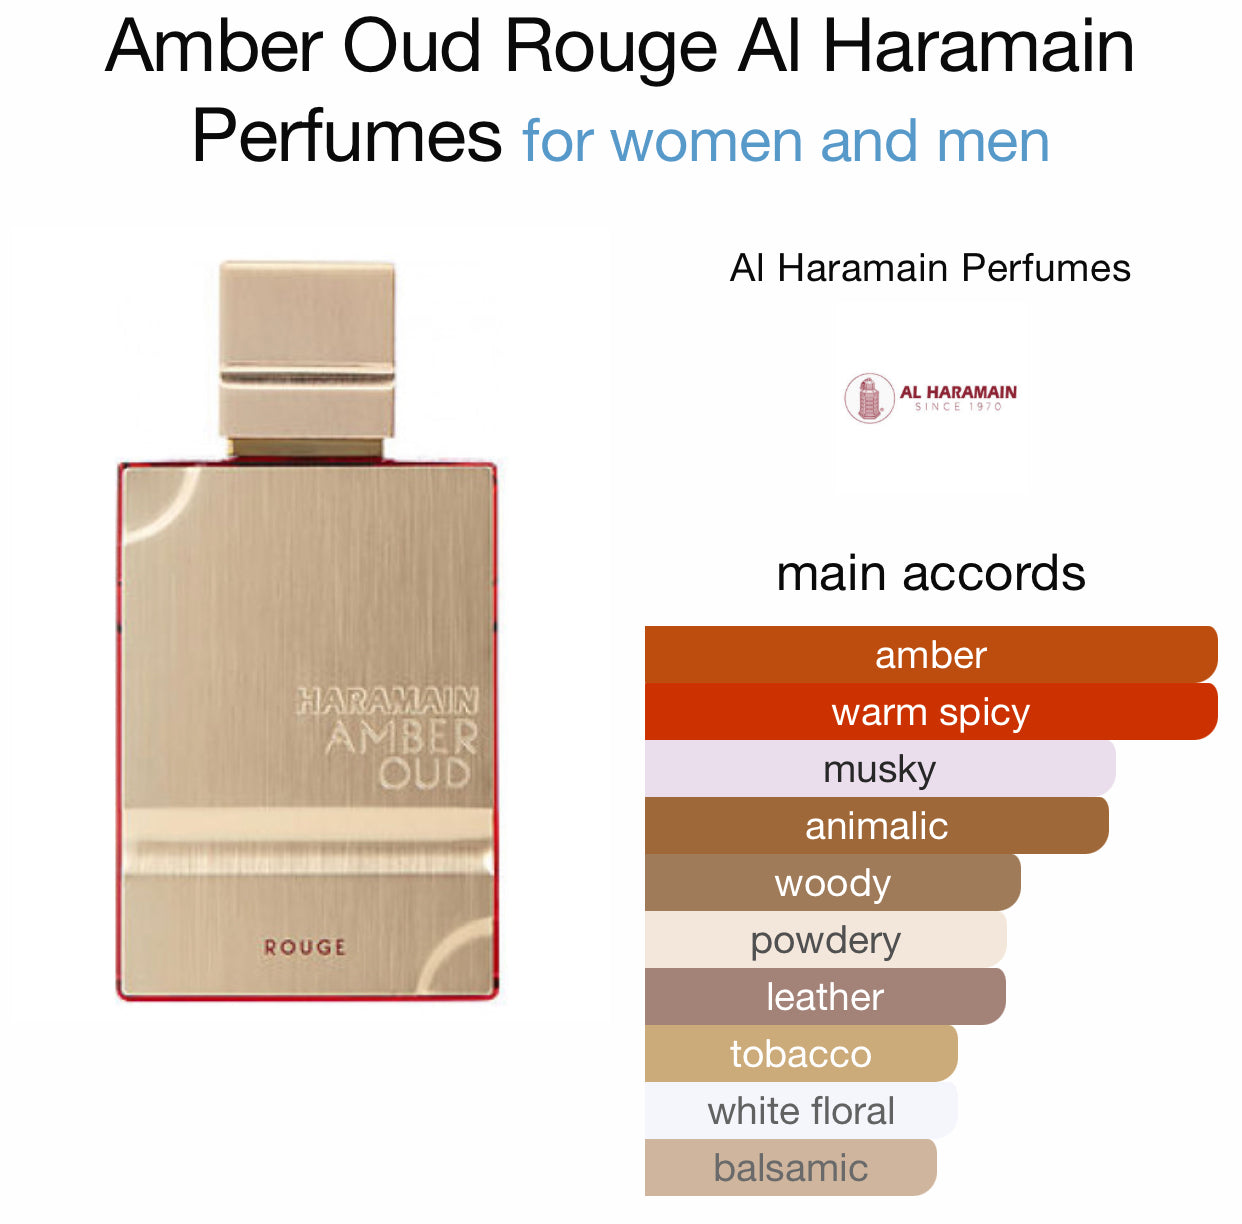 Inspired by Amber Oud Rouge Eau De Parfum